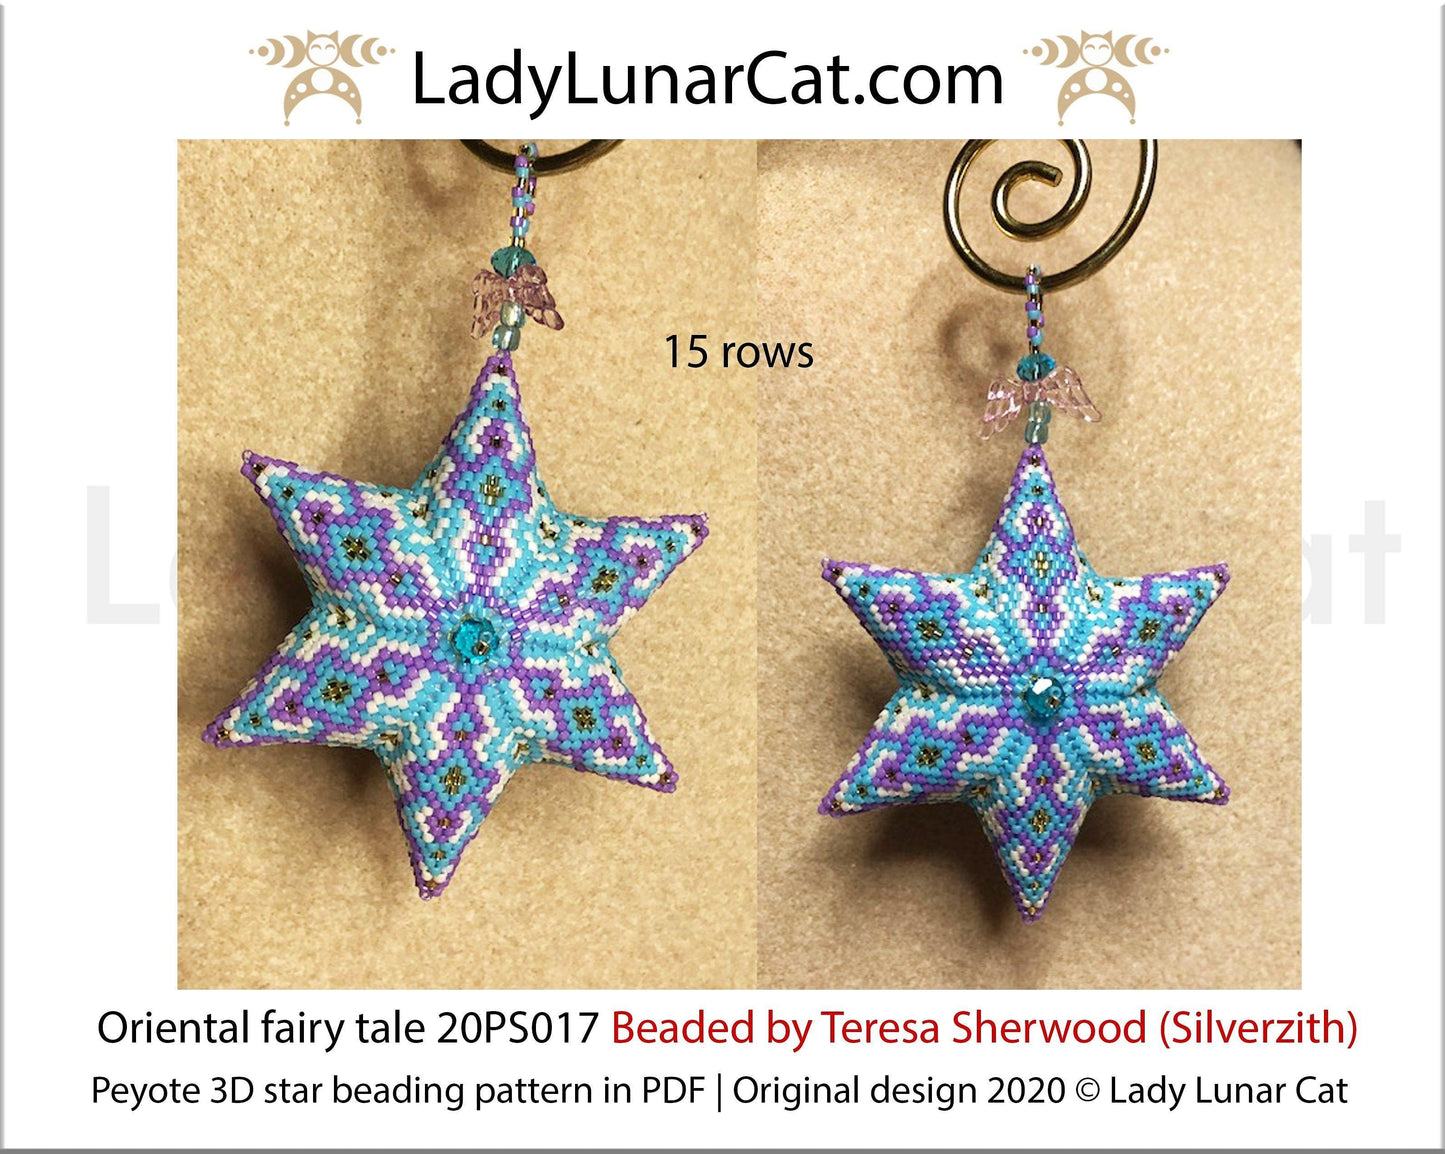 3d peyote star patterns for beading Oriental fairy tale 20PS017 LadyLunarCat